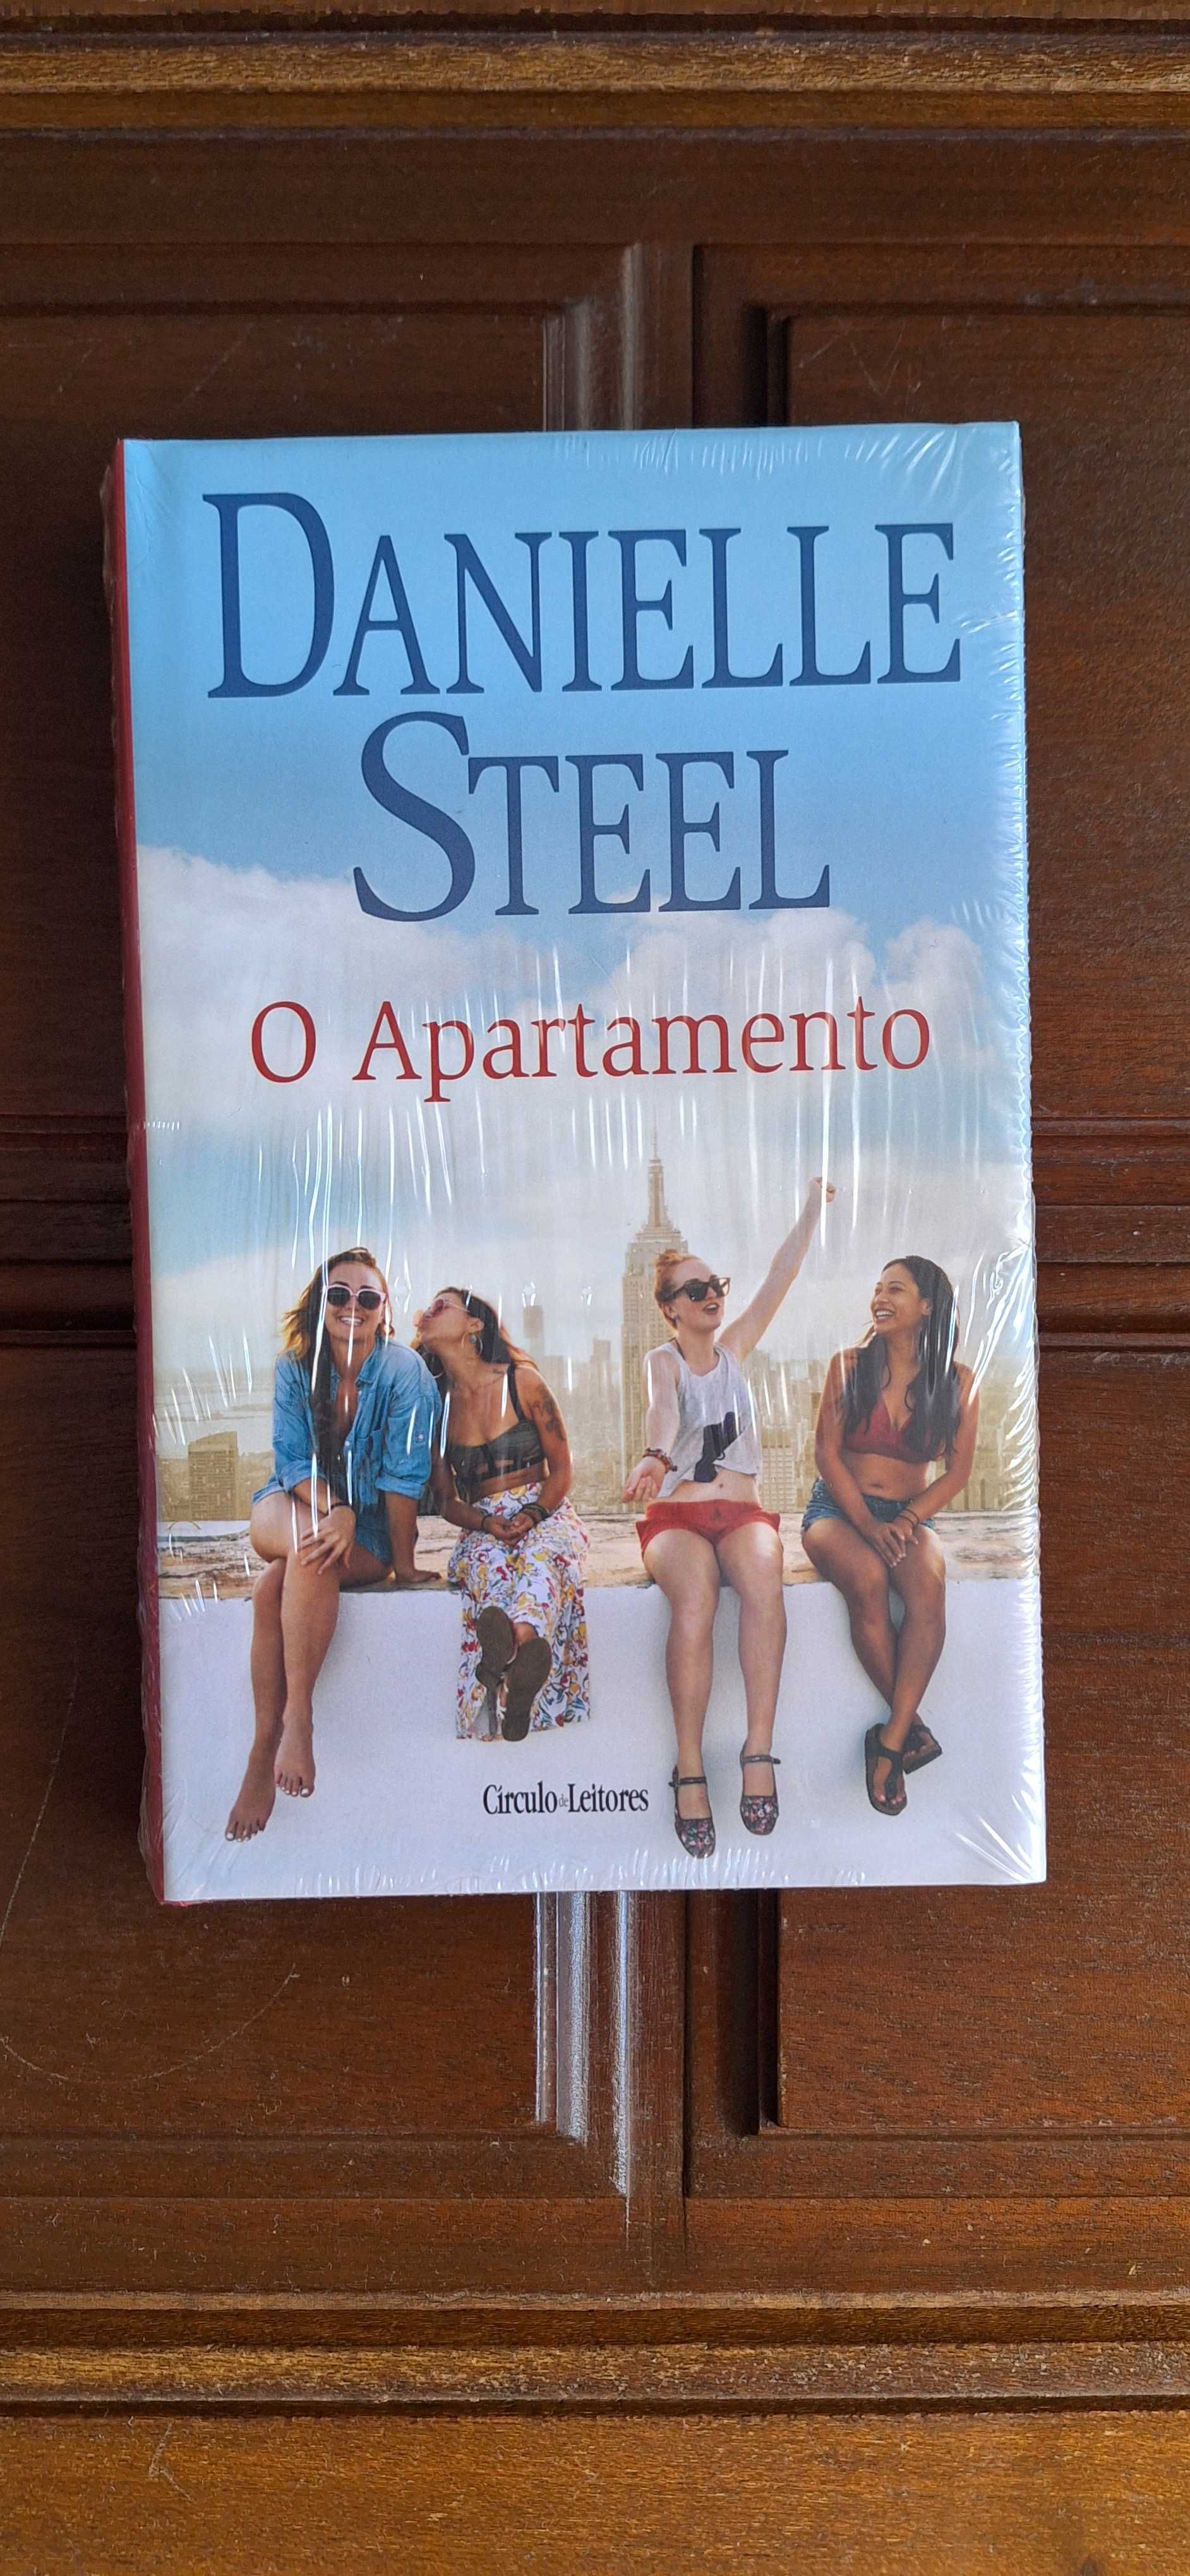 Livro "O apartamento" de Danielle Steel